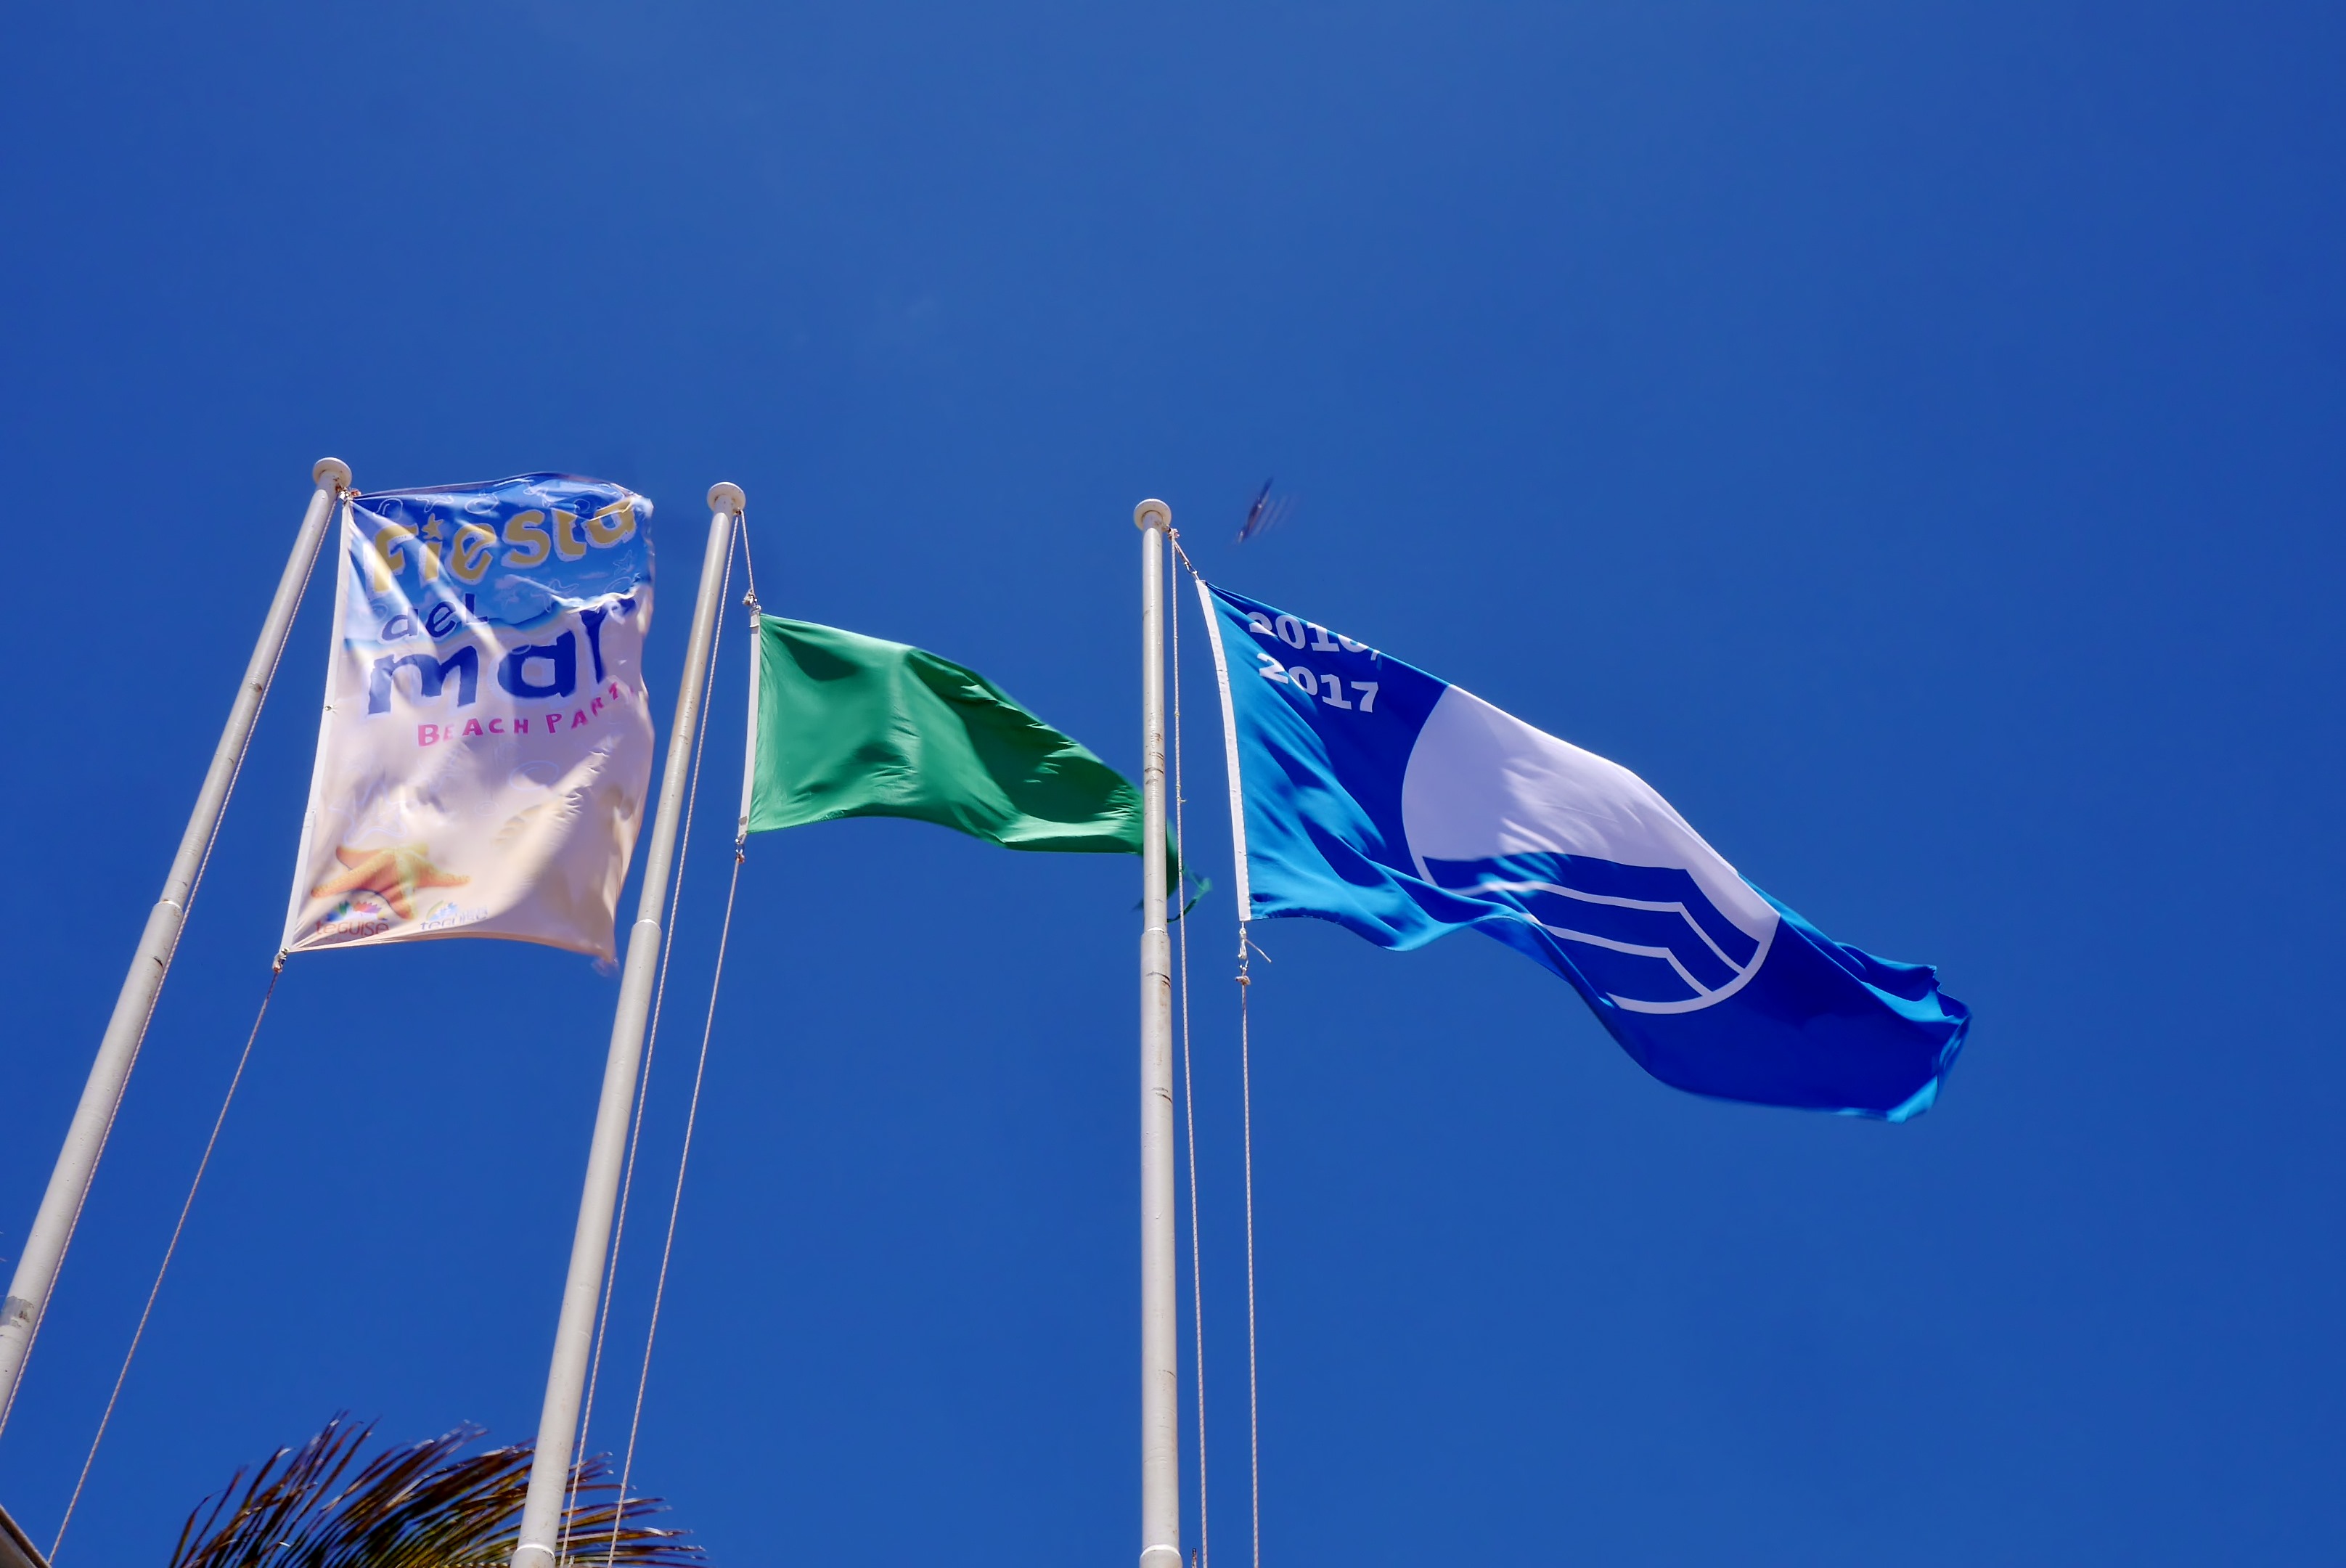 Fiesta del Mar and Blue Flag